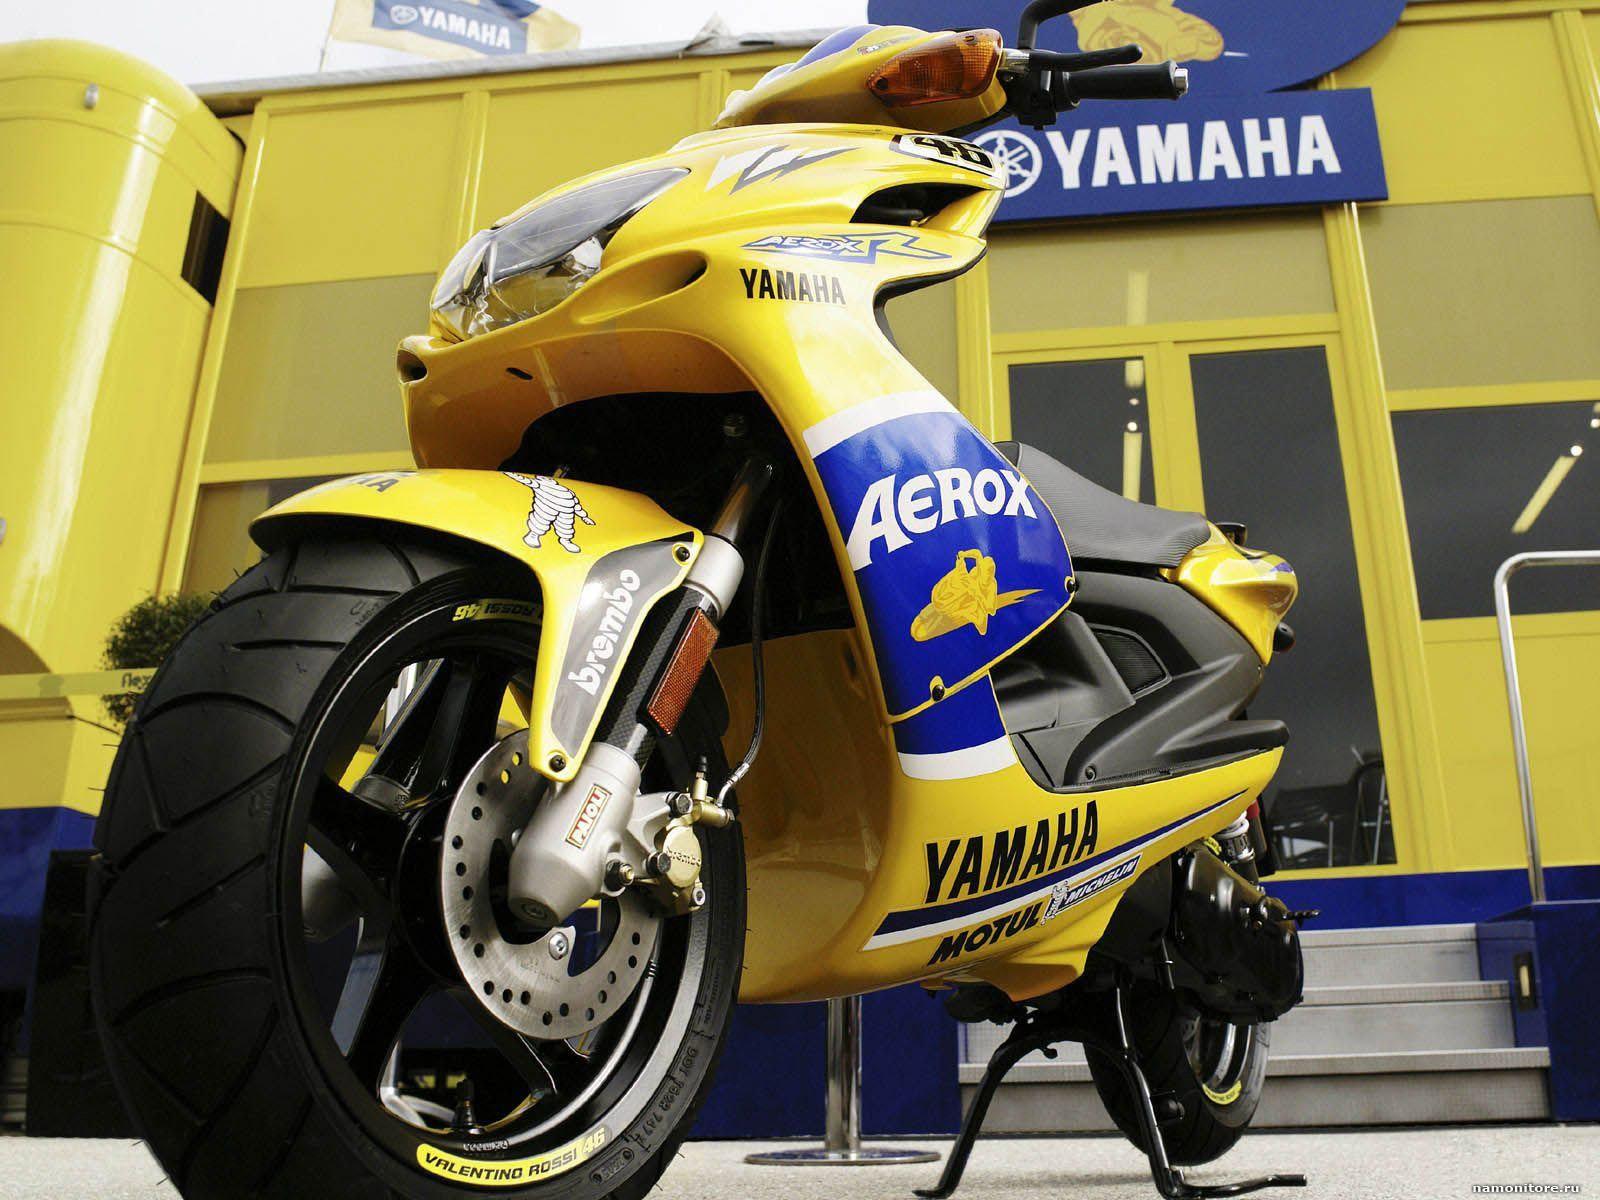 Yamaha Aerox Race Replica photo, motorcycles, technics, Yamaha